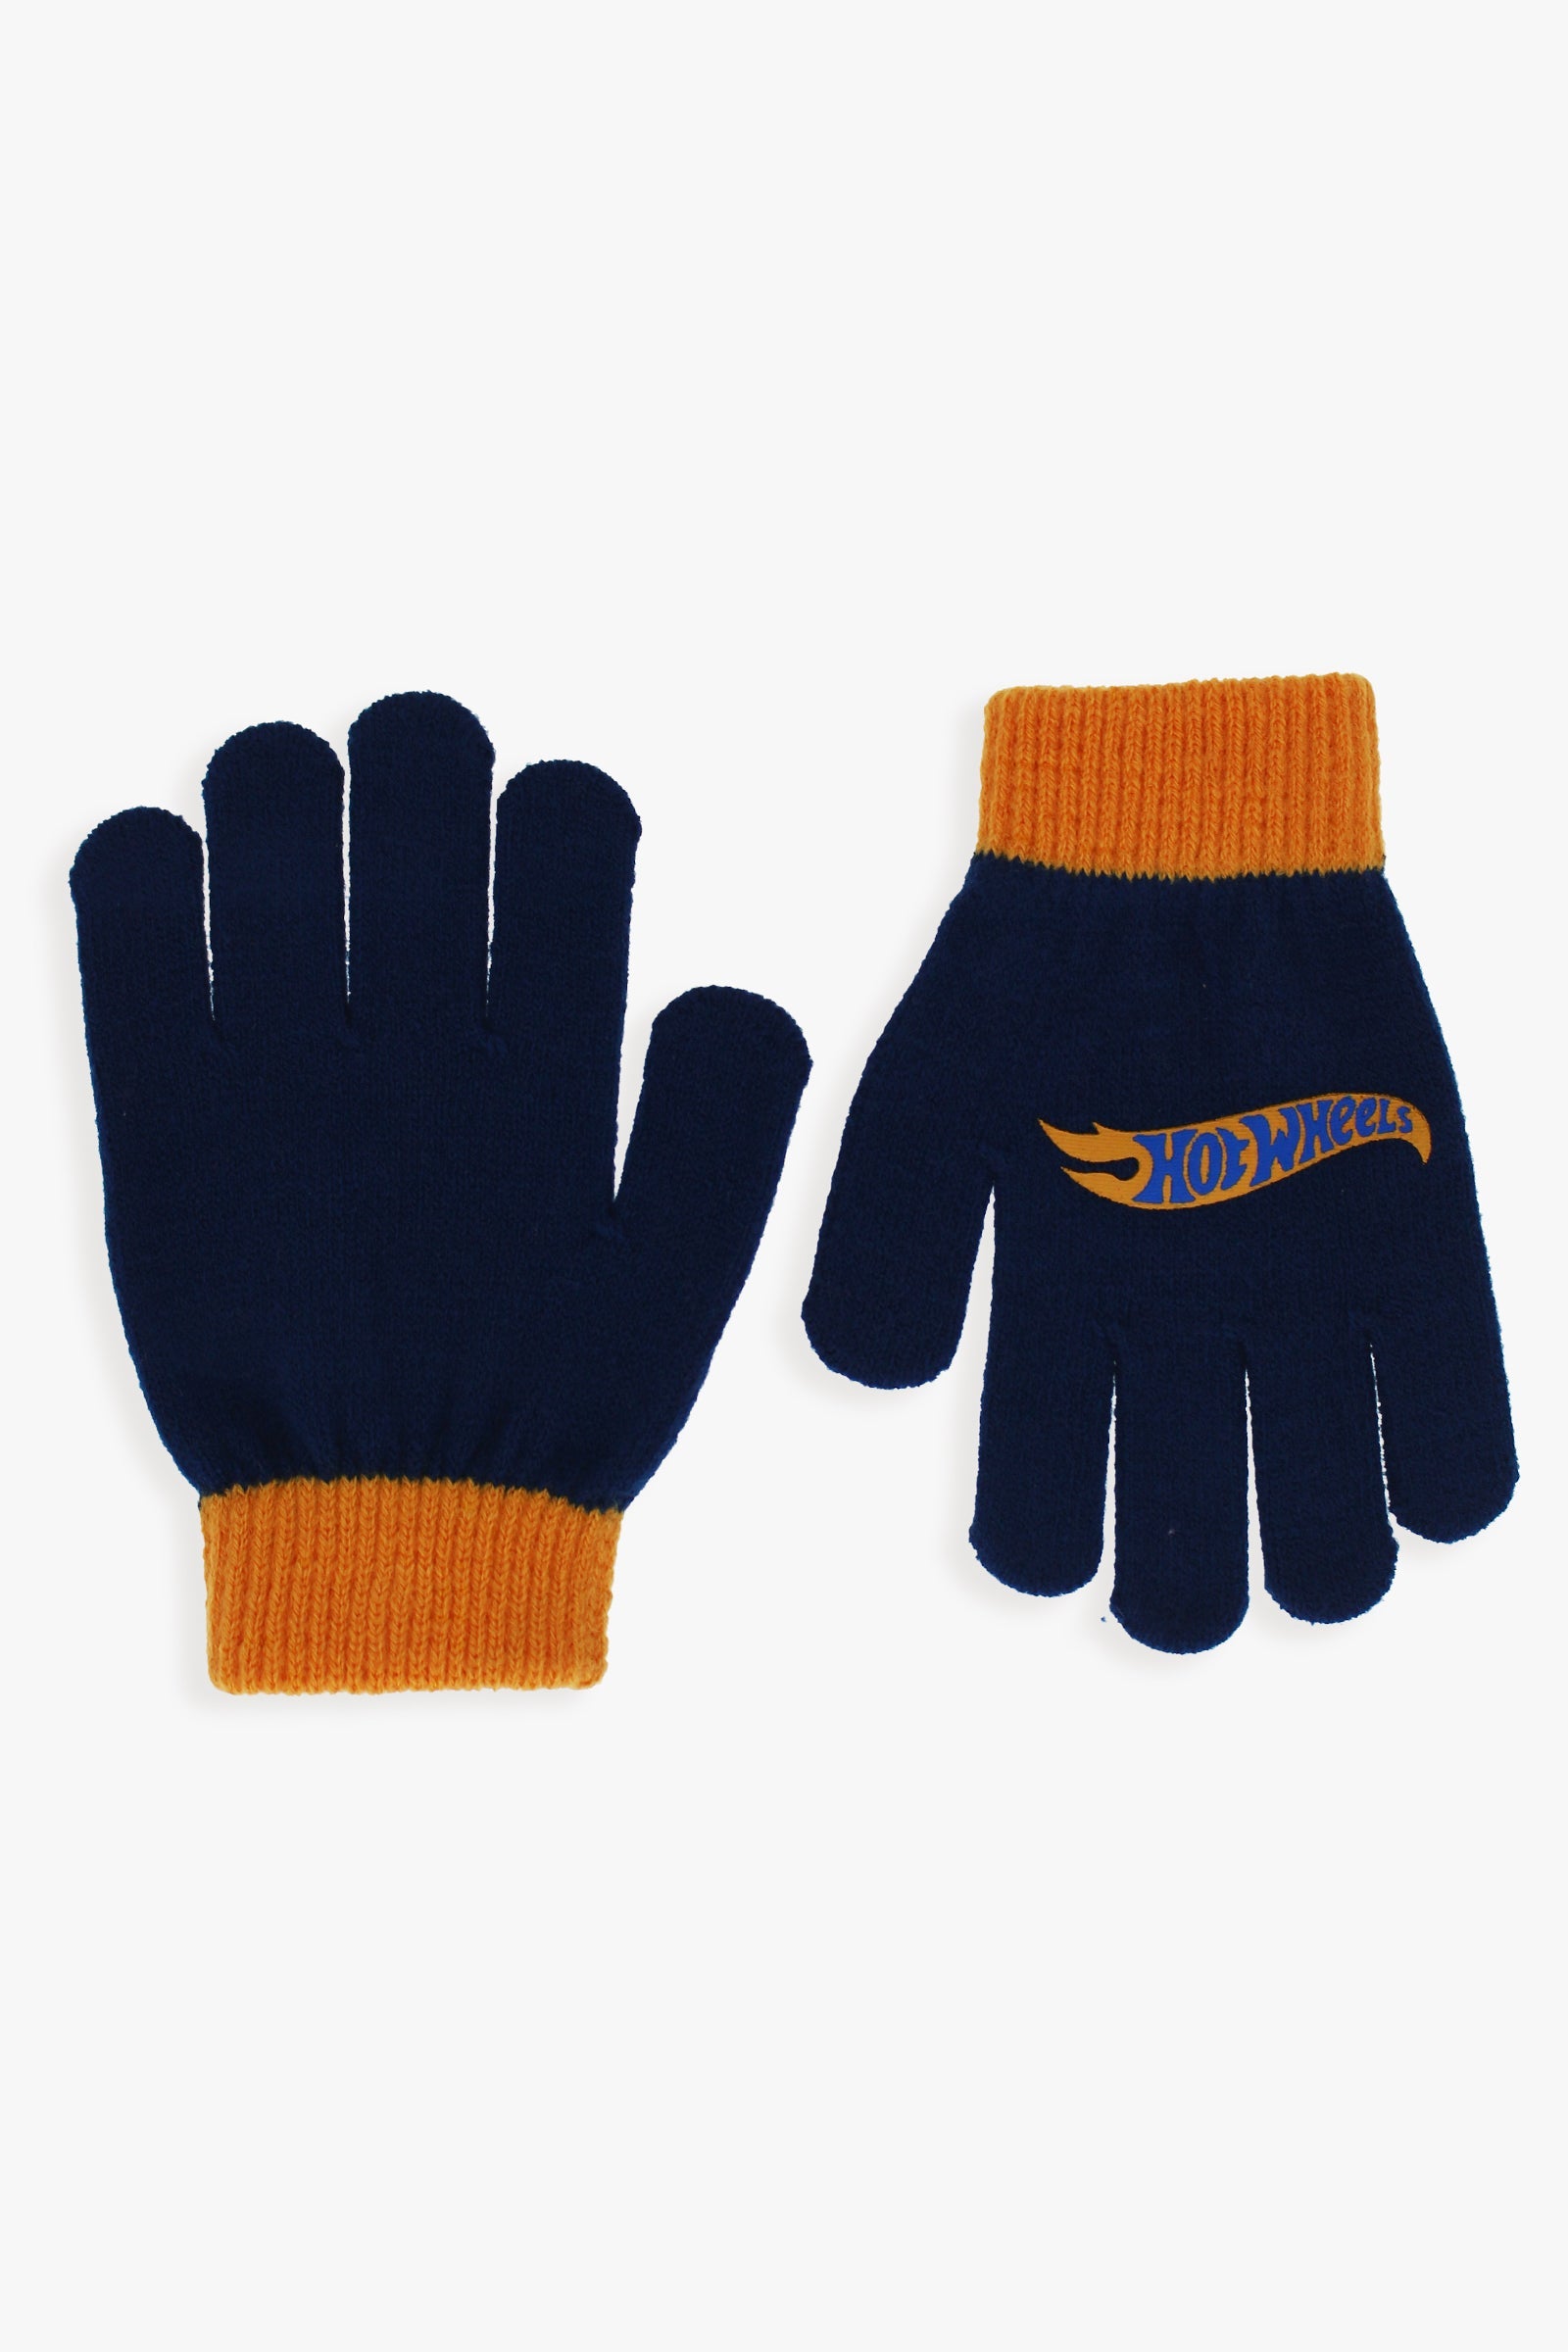 Gertex Hot Wheels Youth Boys Magic Winter Gloves | Kids Size 4-6T